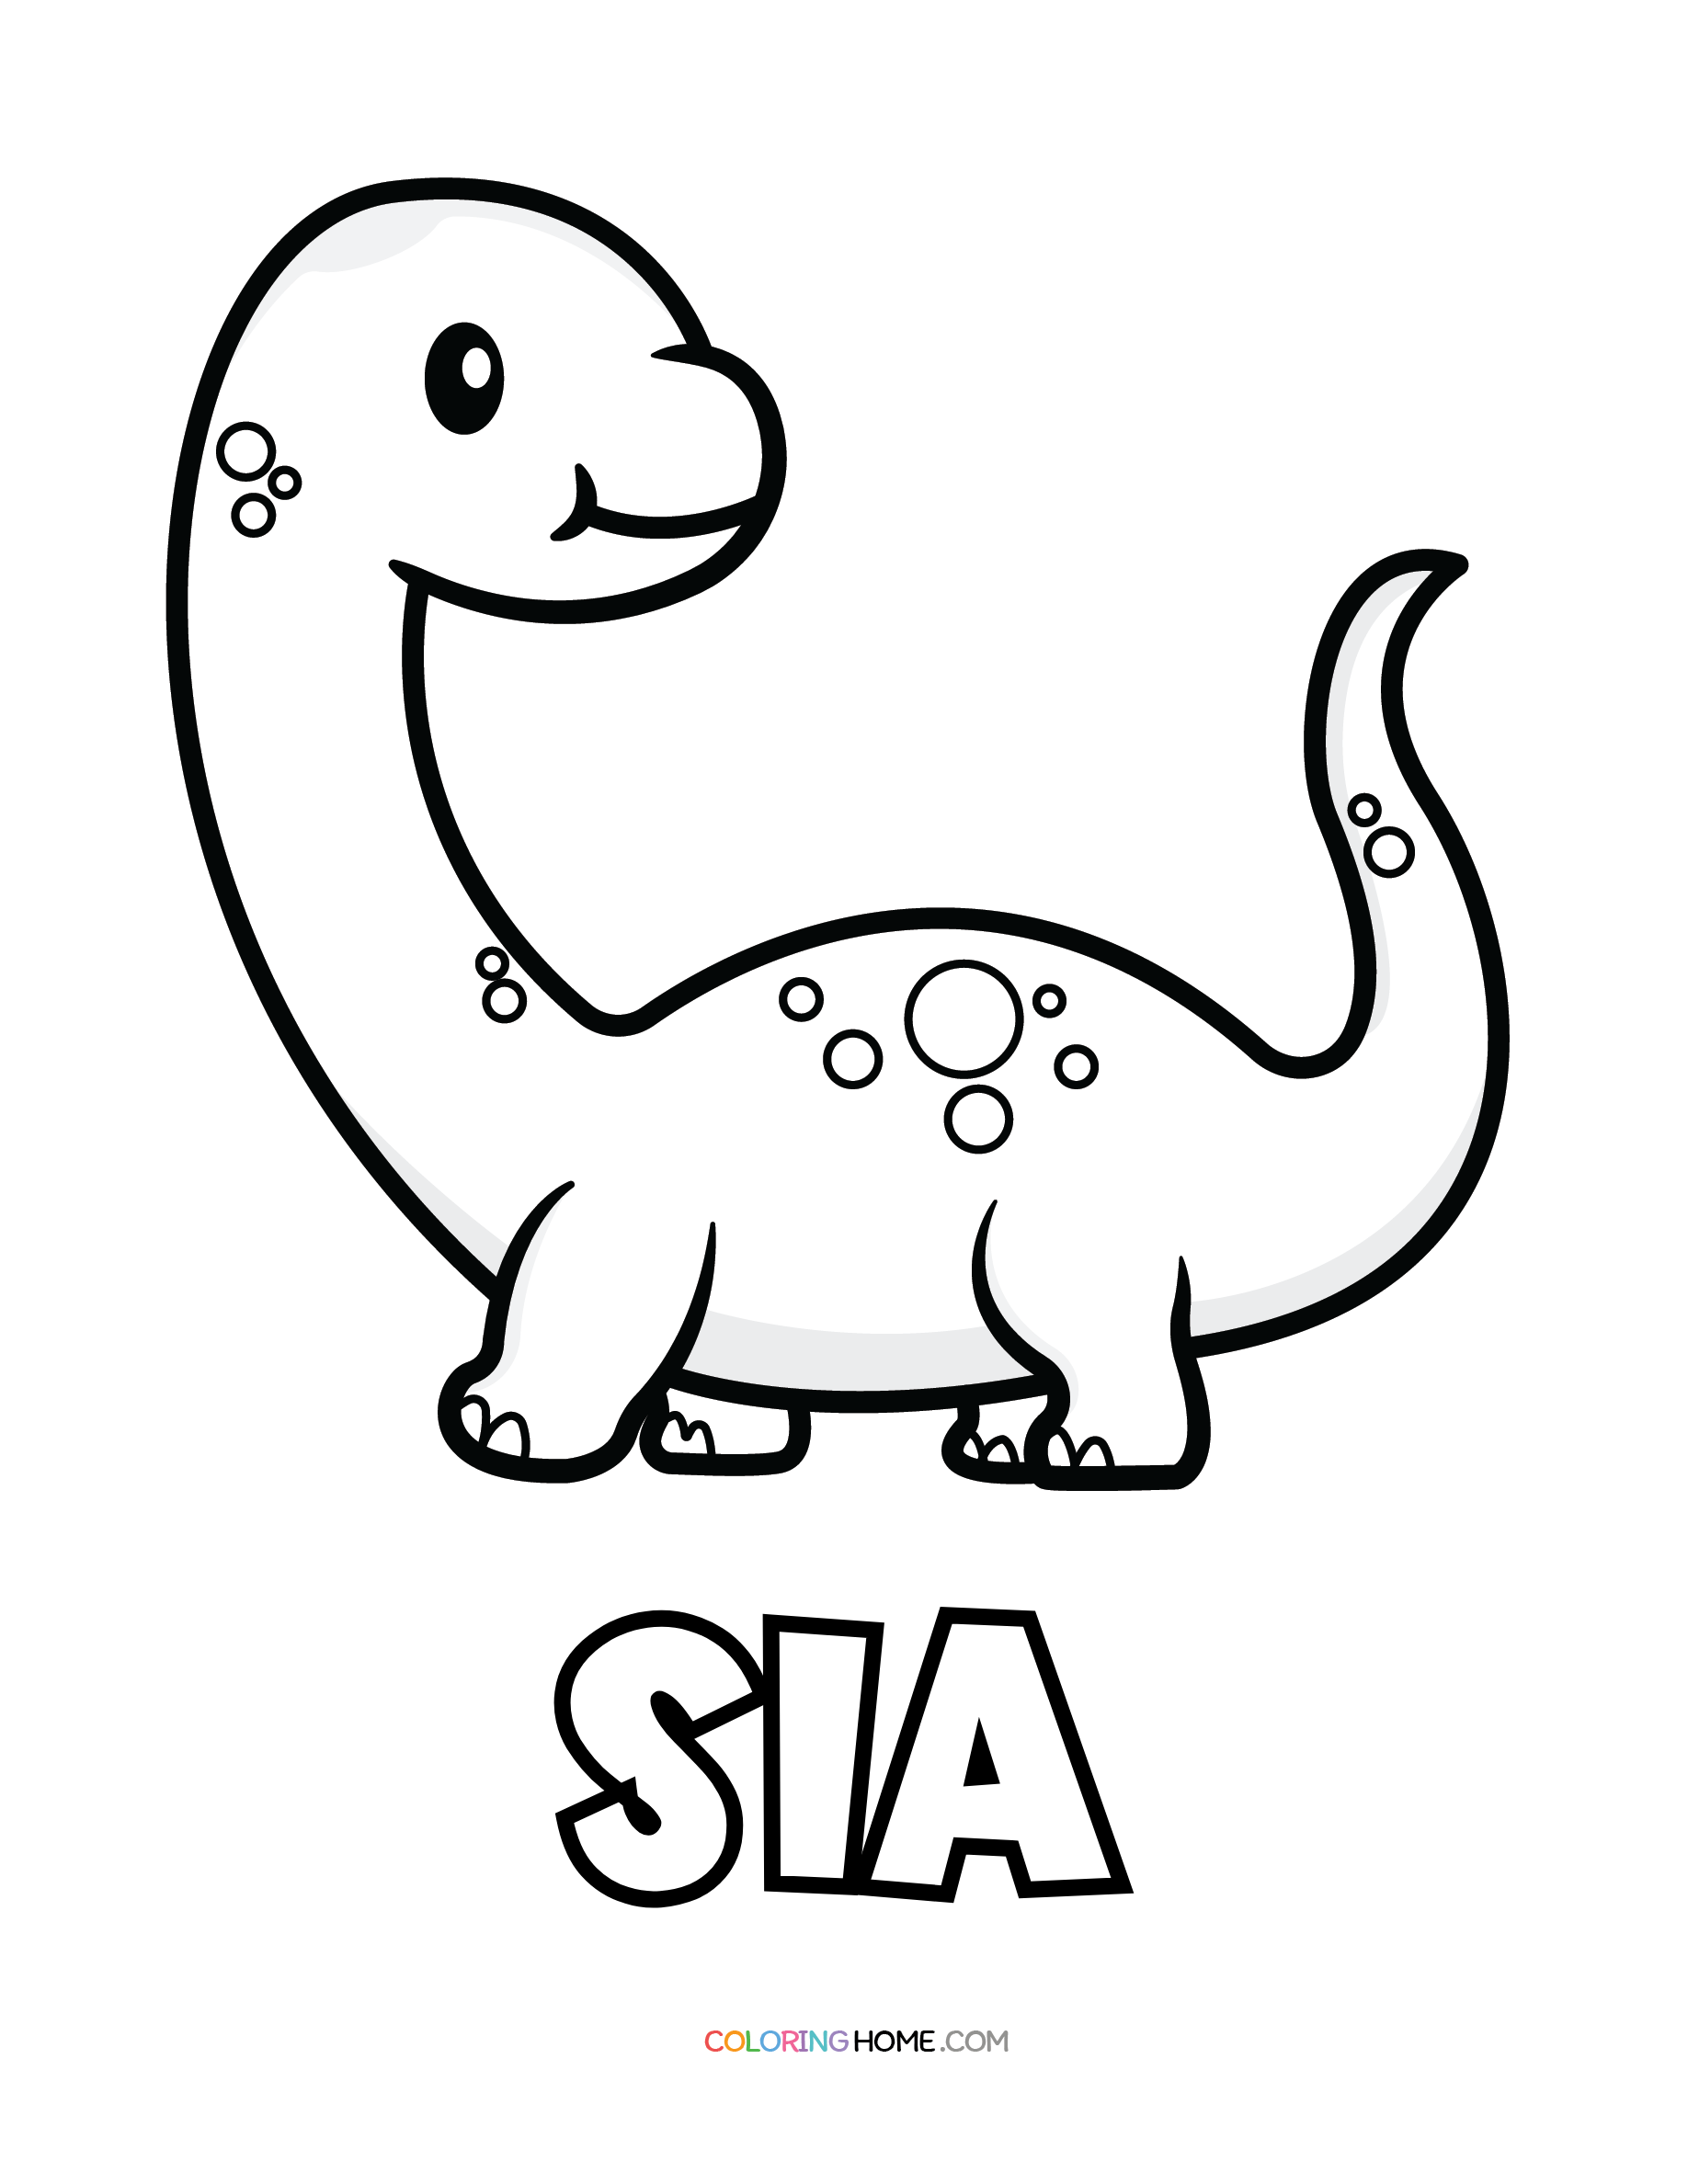 Sia dinosaur coloring page